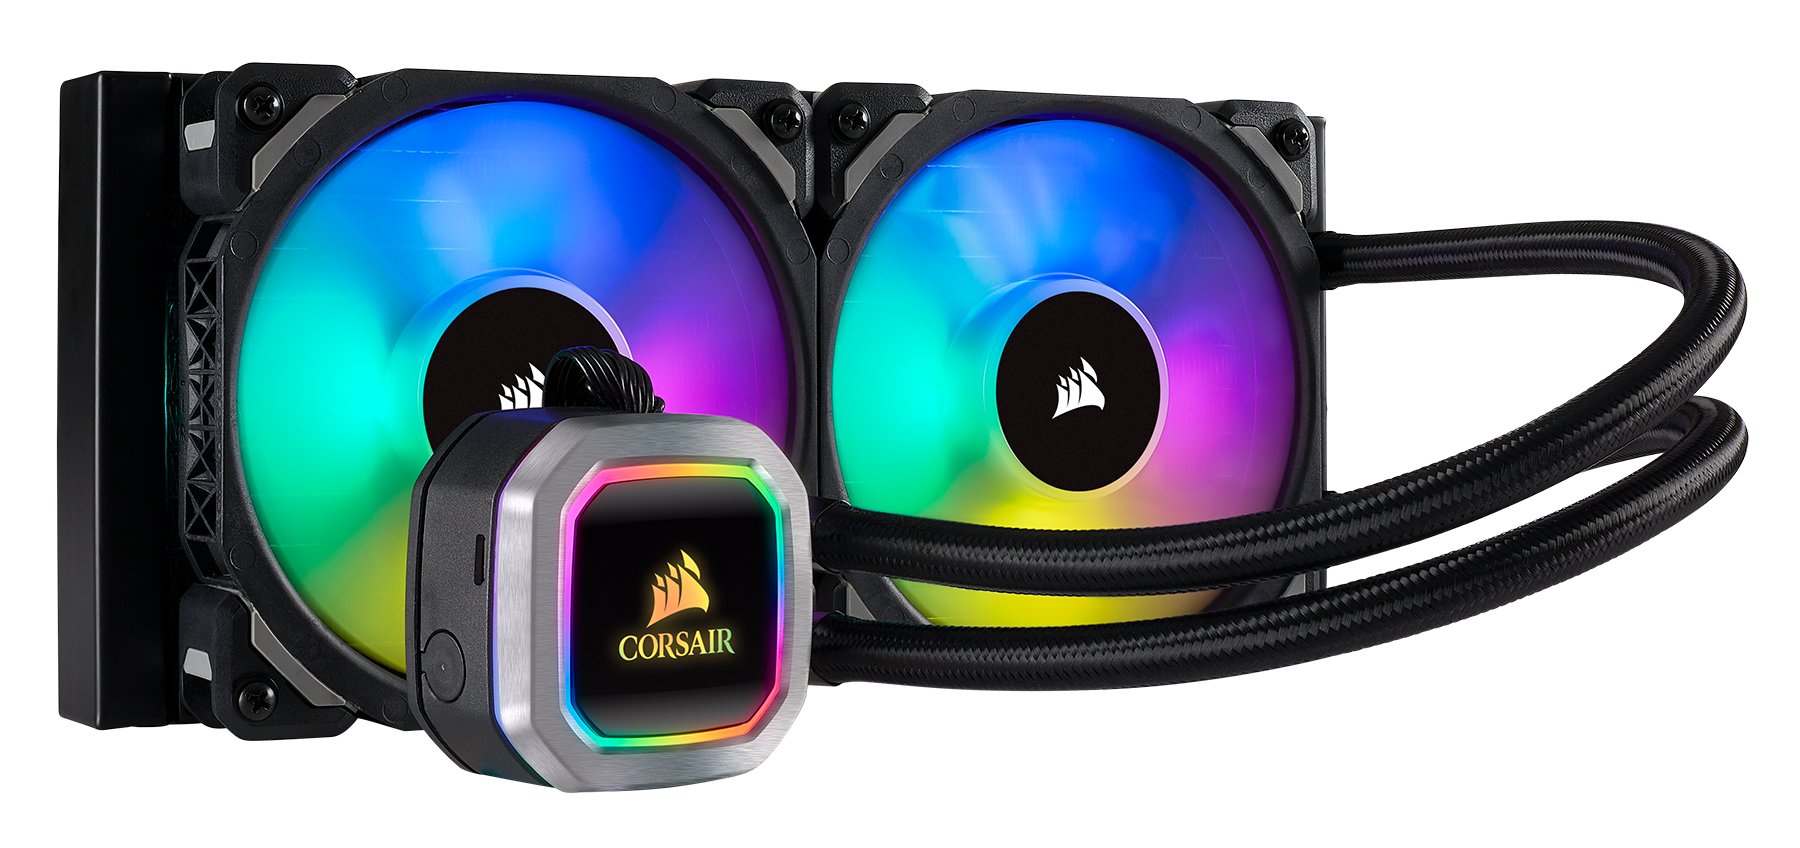 Corsair H100i RGB Platinum